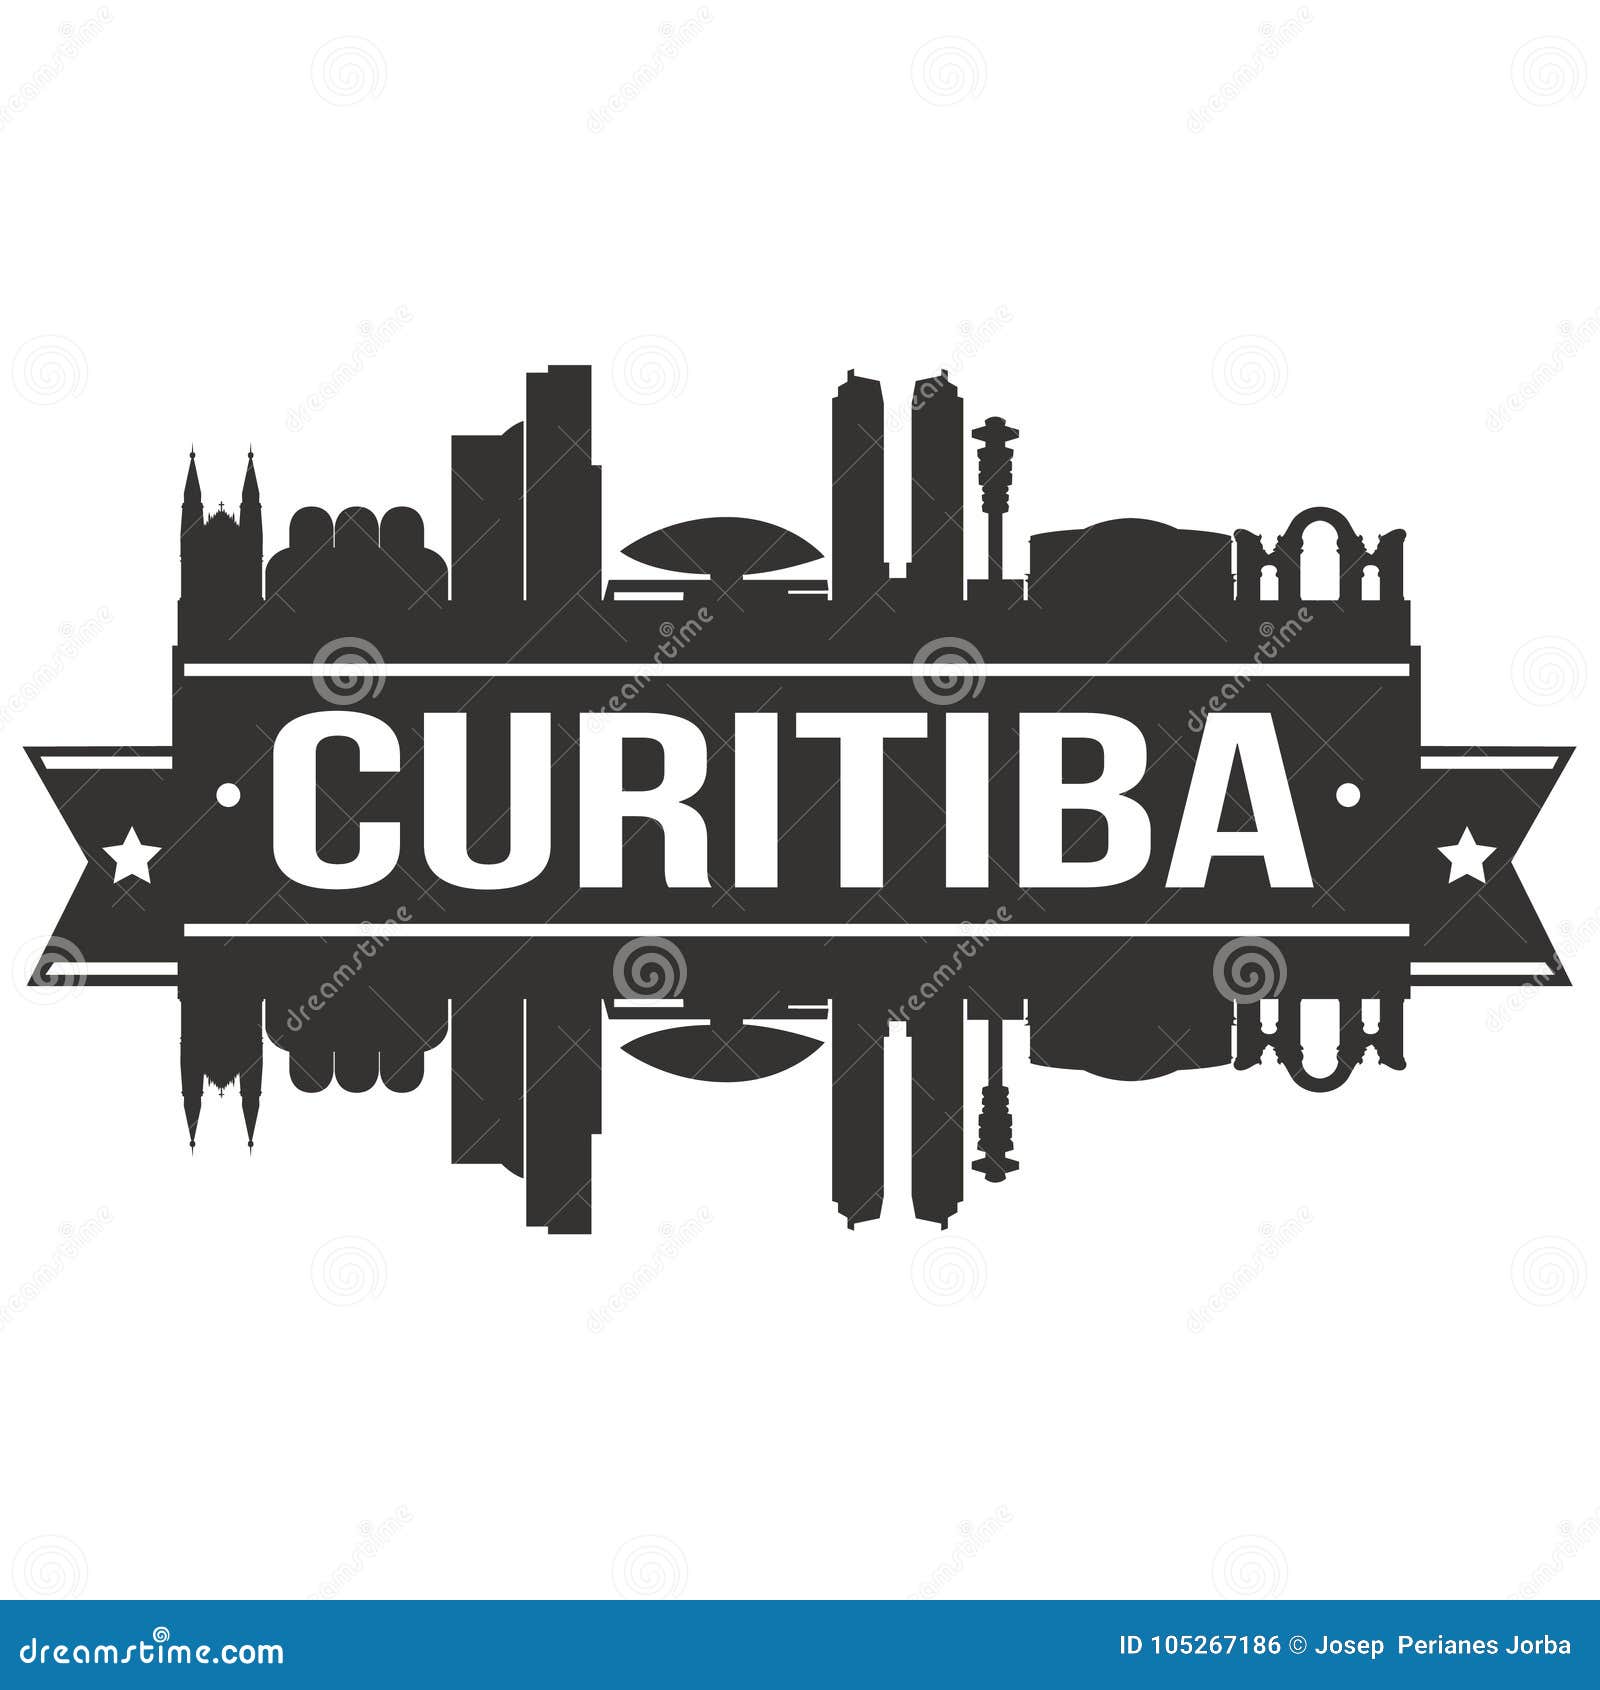 curitiba brazil south america icon  art  skyline flat city silhouette editable template